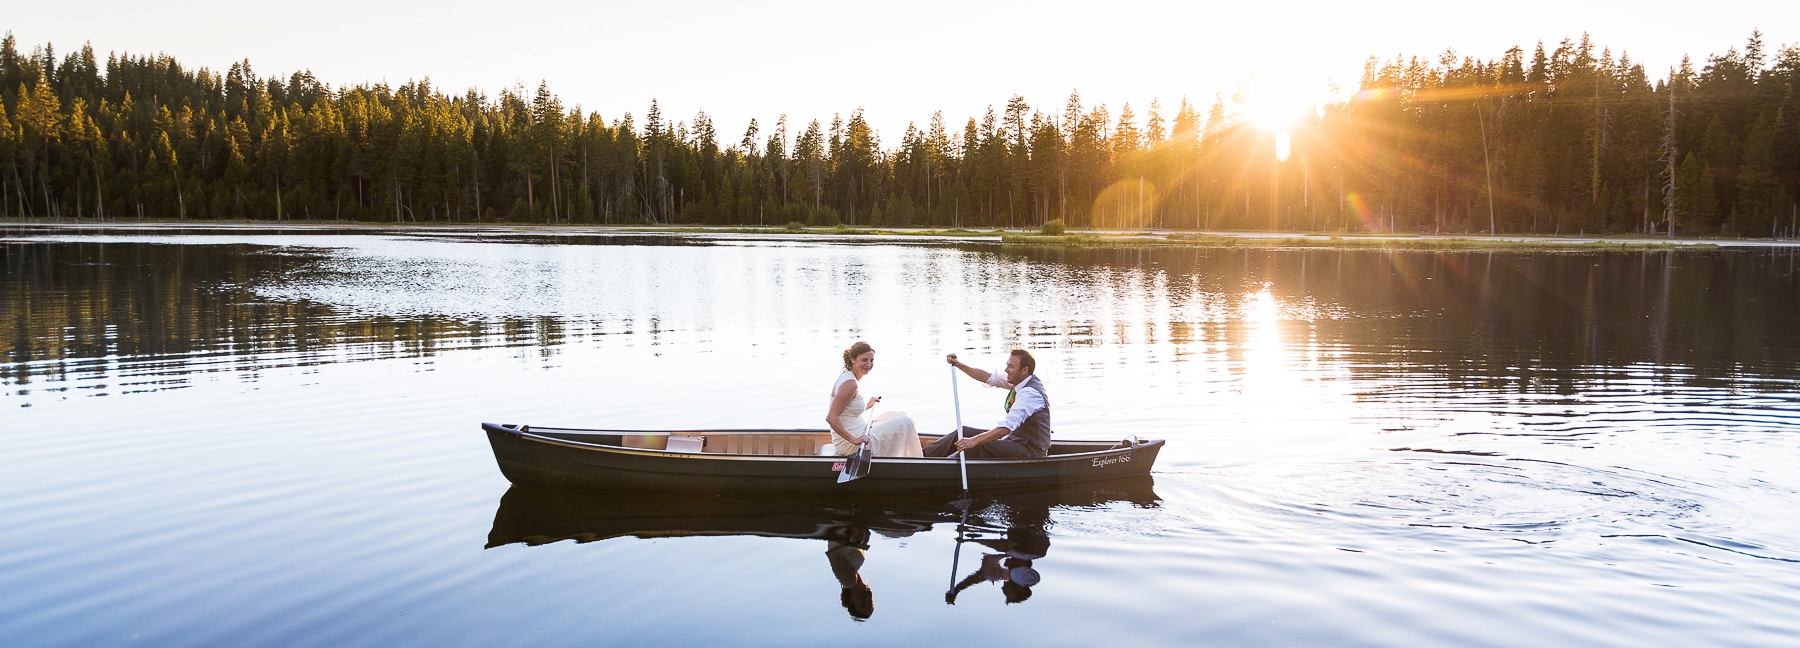 remote wedding lassen national park